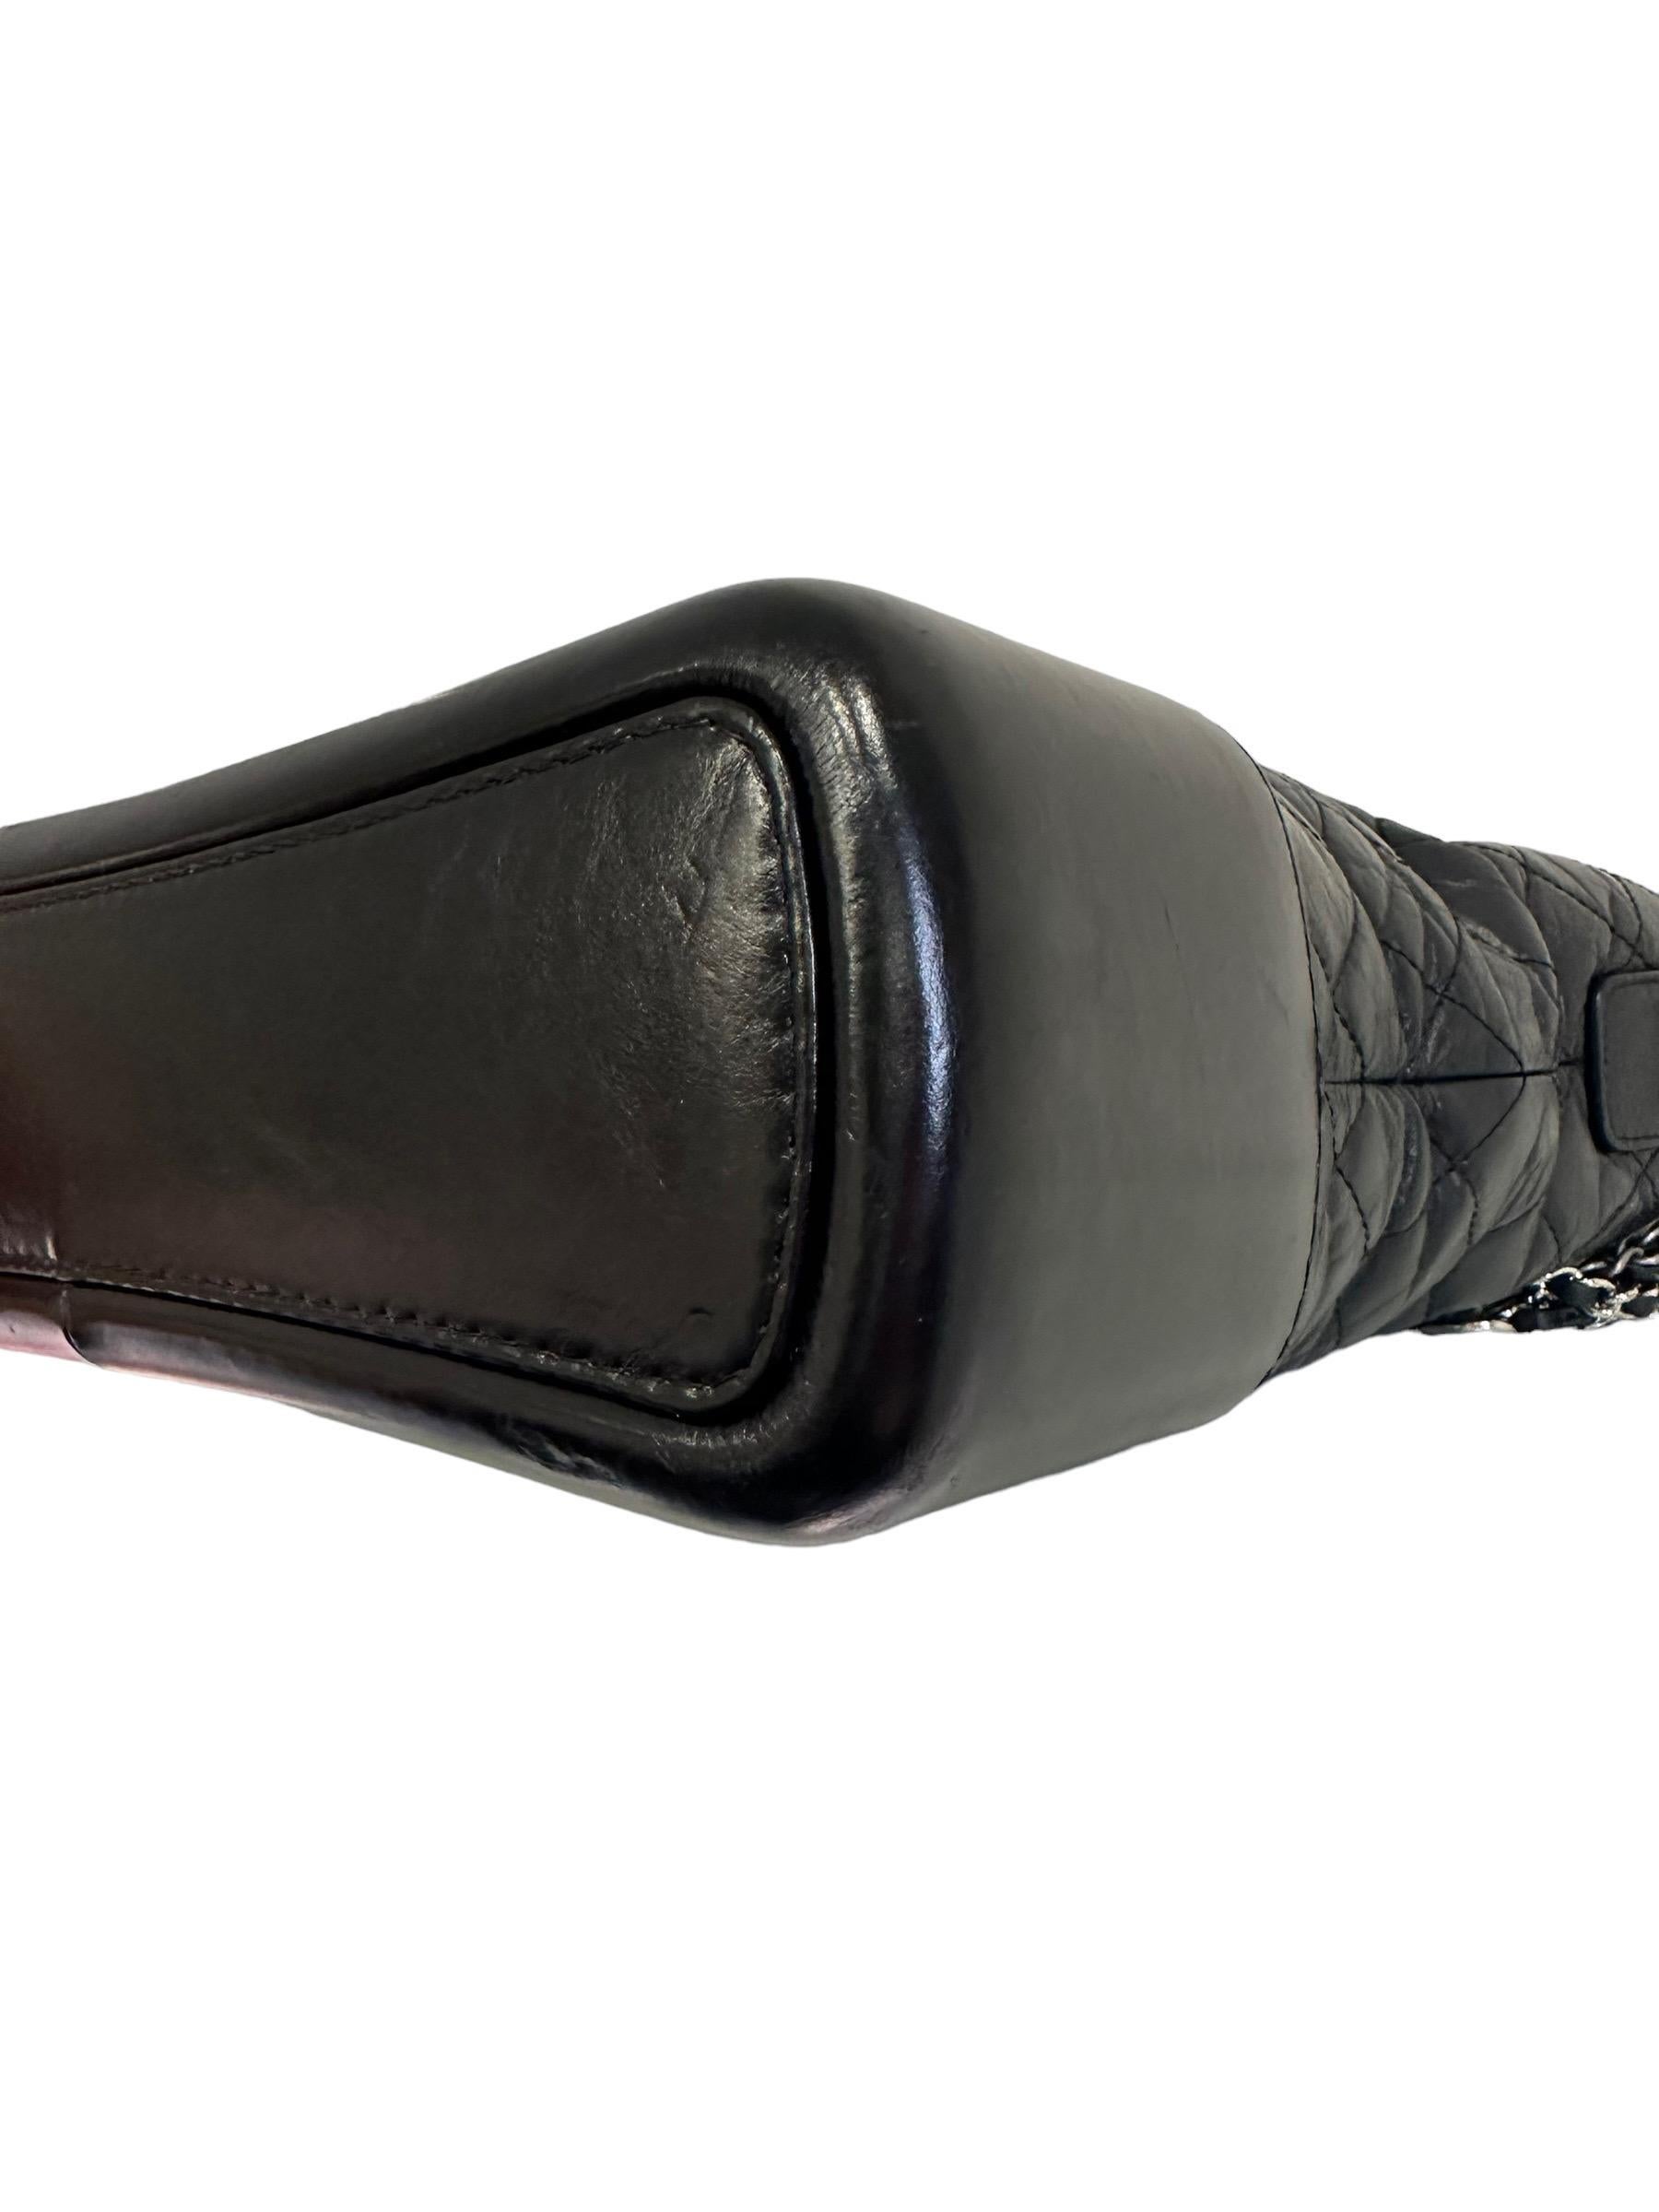 2018 Chanel Gabrielle Maxi Black Leather Top Shoulder Bag For Sale 9